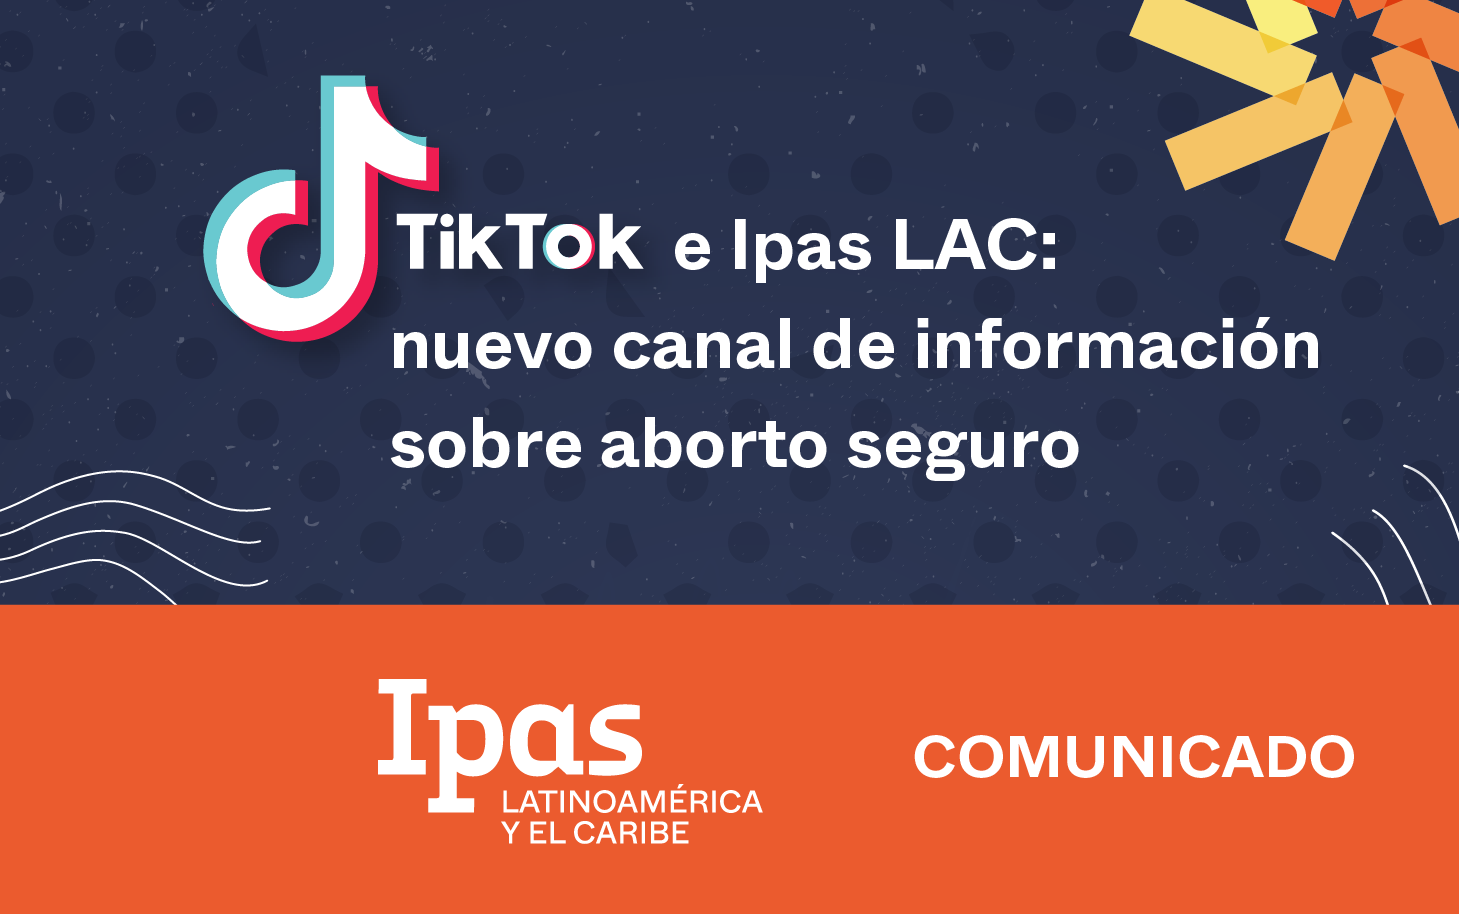 TikTok e Ipas LAC: nuevo canal de información sobre aborto seguro